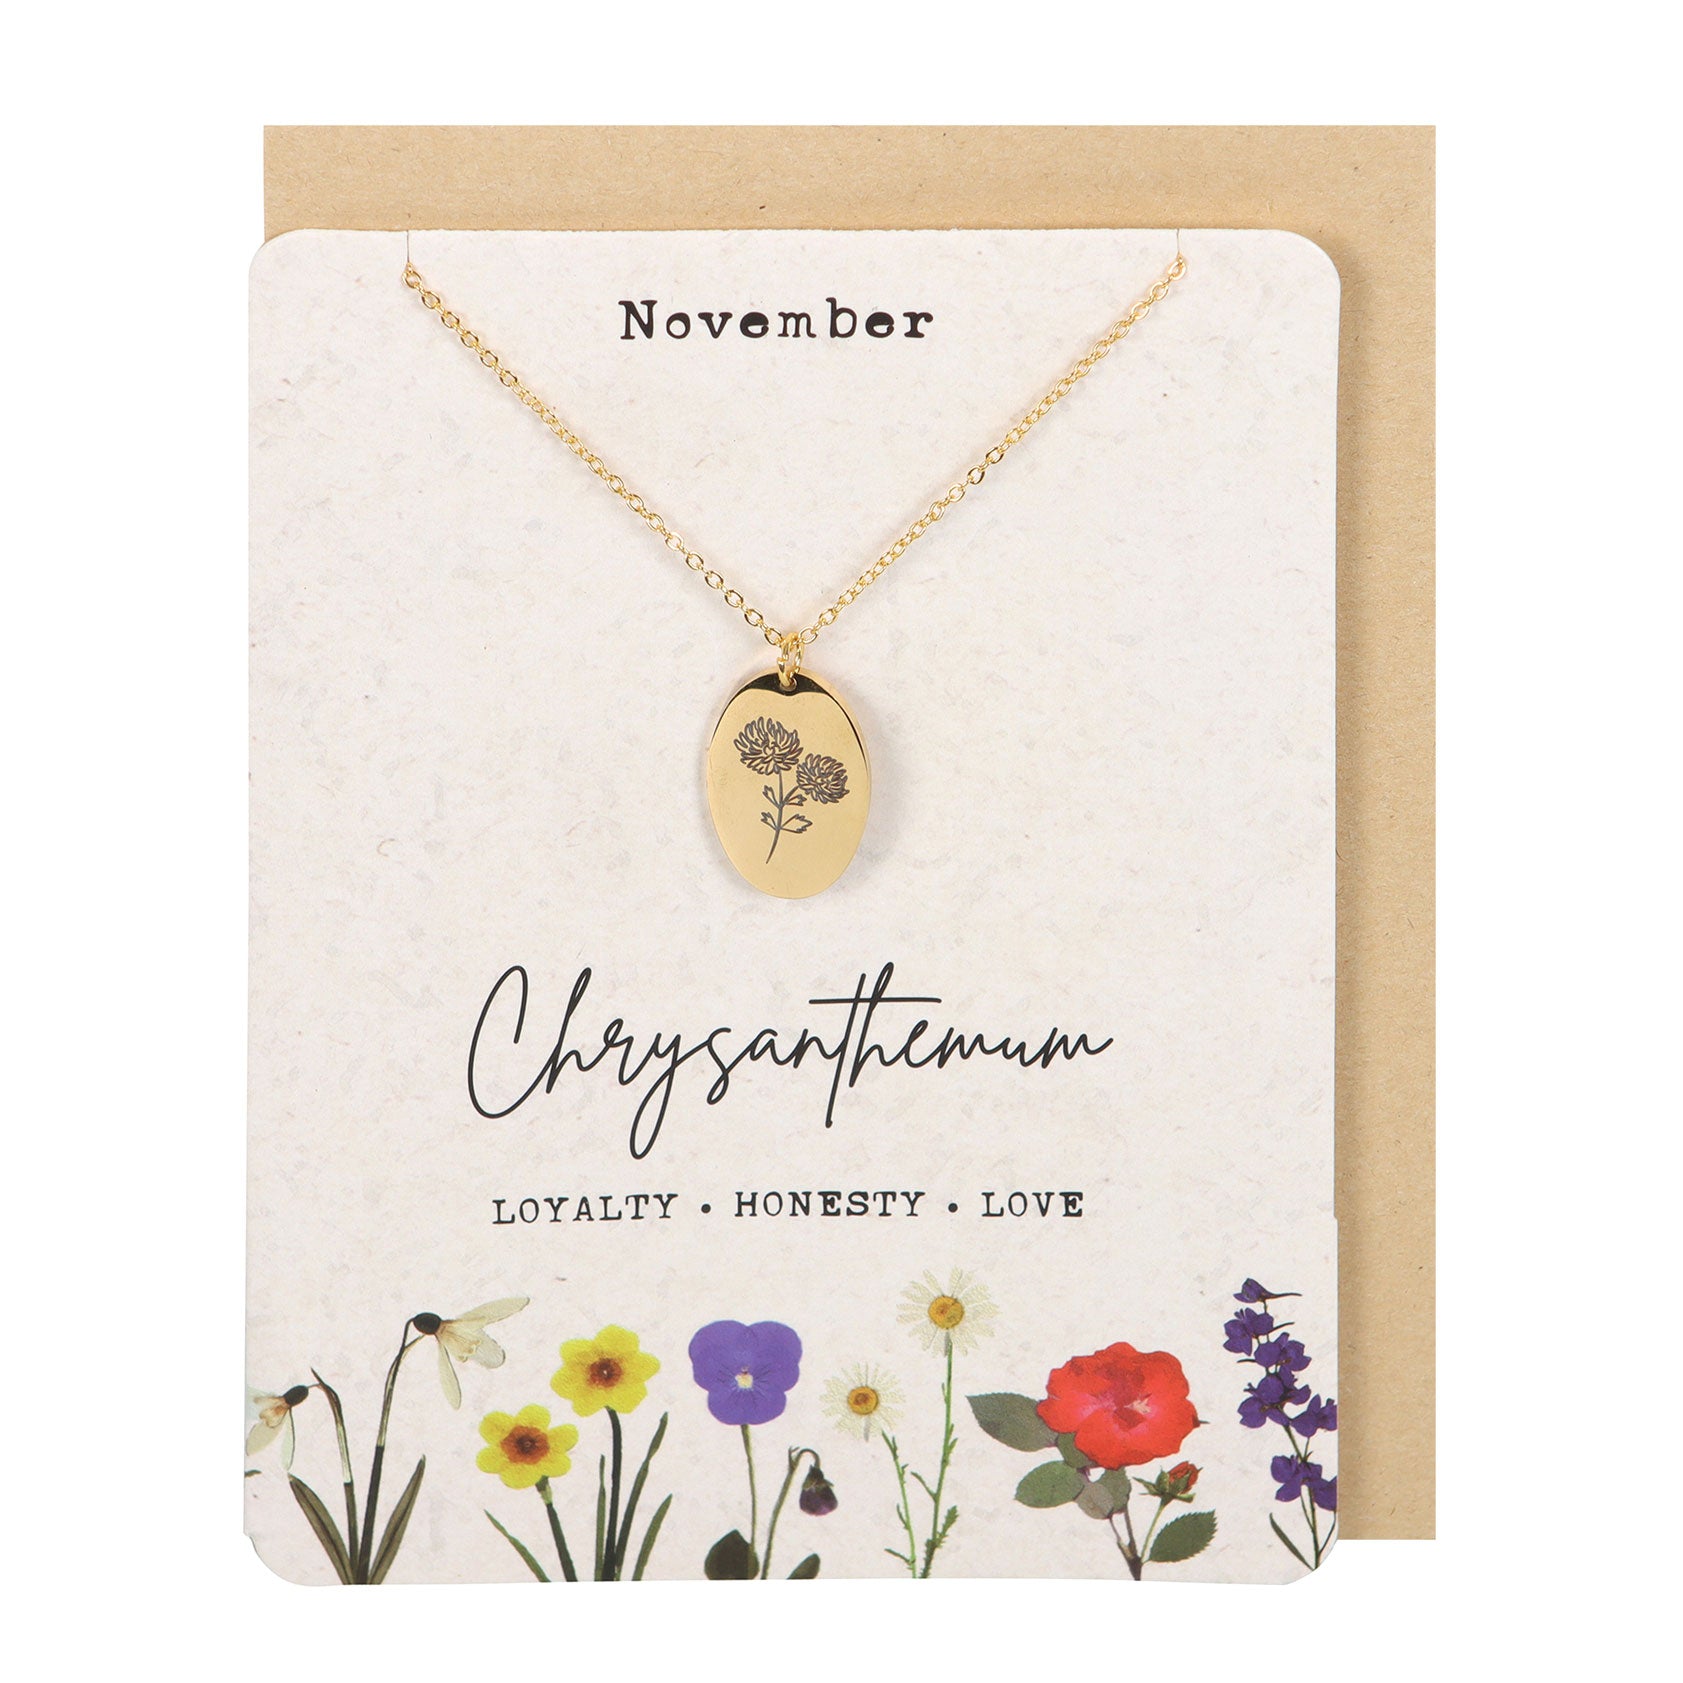 View November Chrysanthemum Birth Flower Necklace Card information